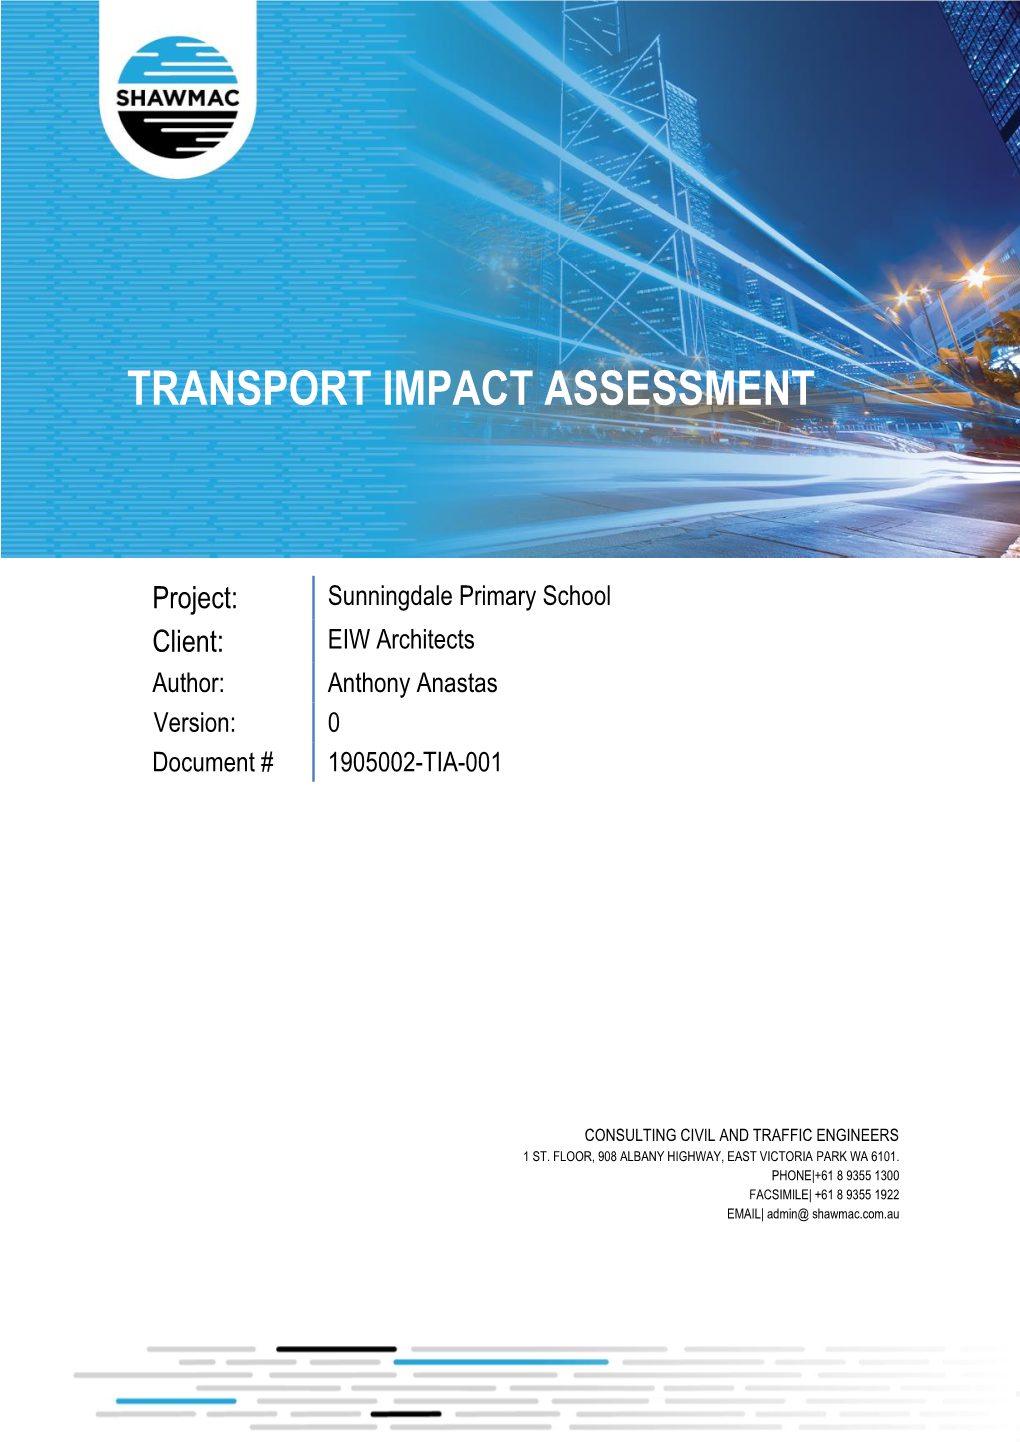 Transport Impact Assessment